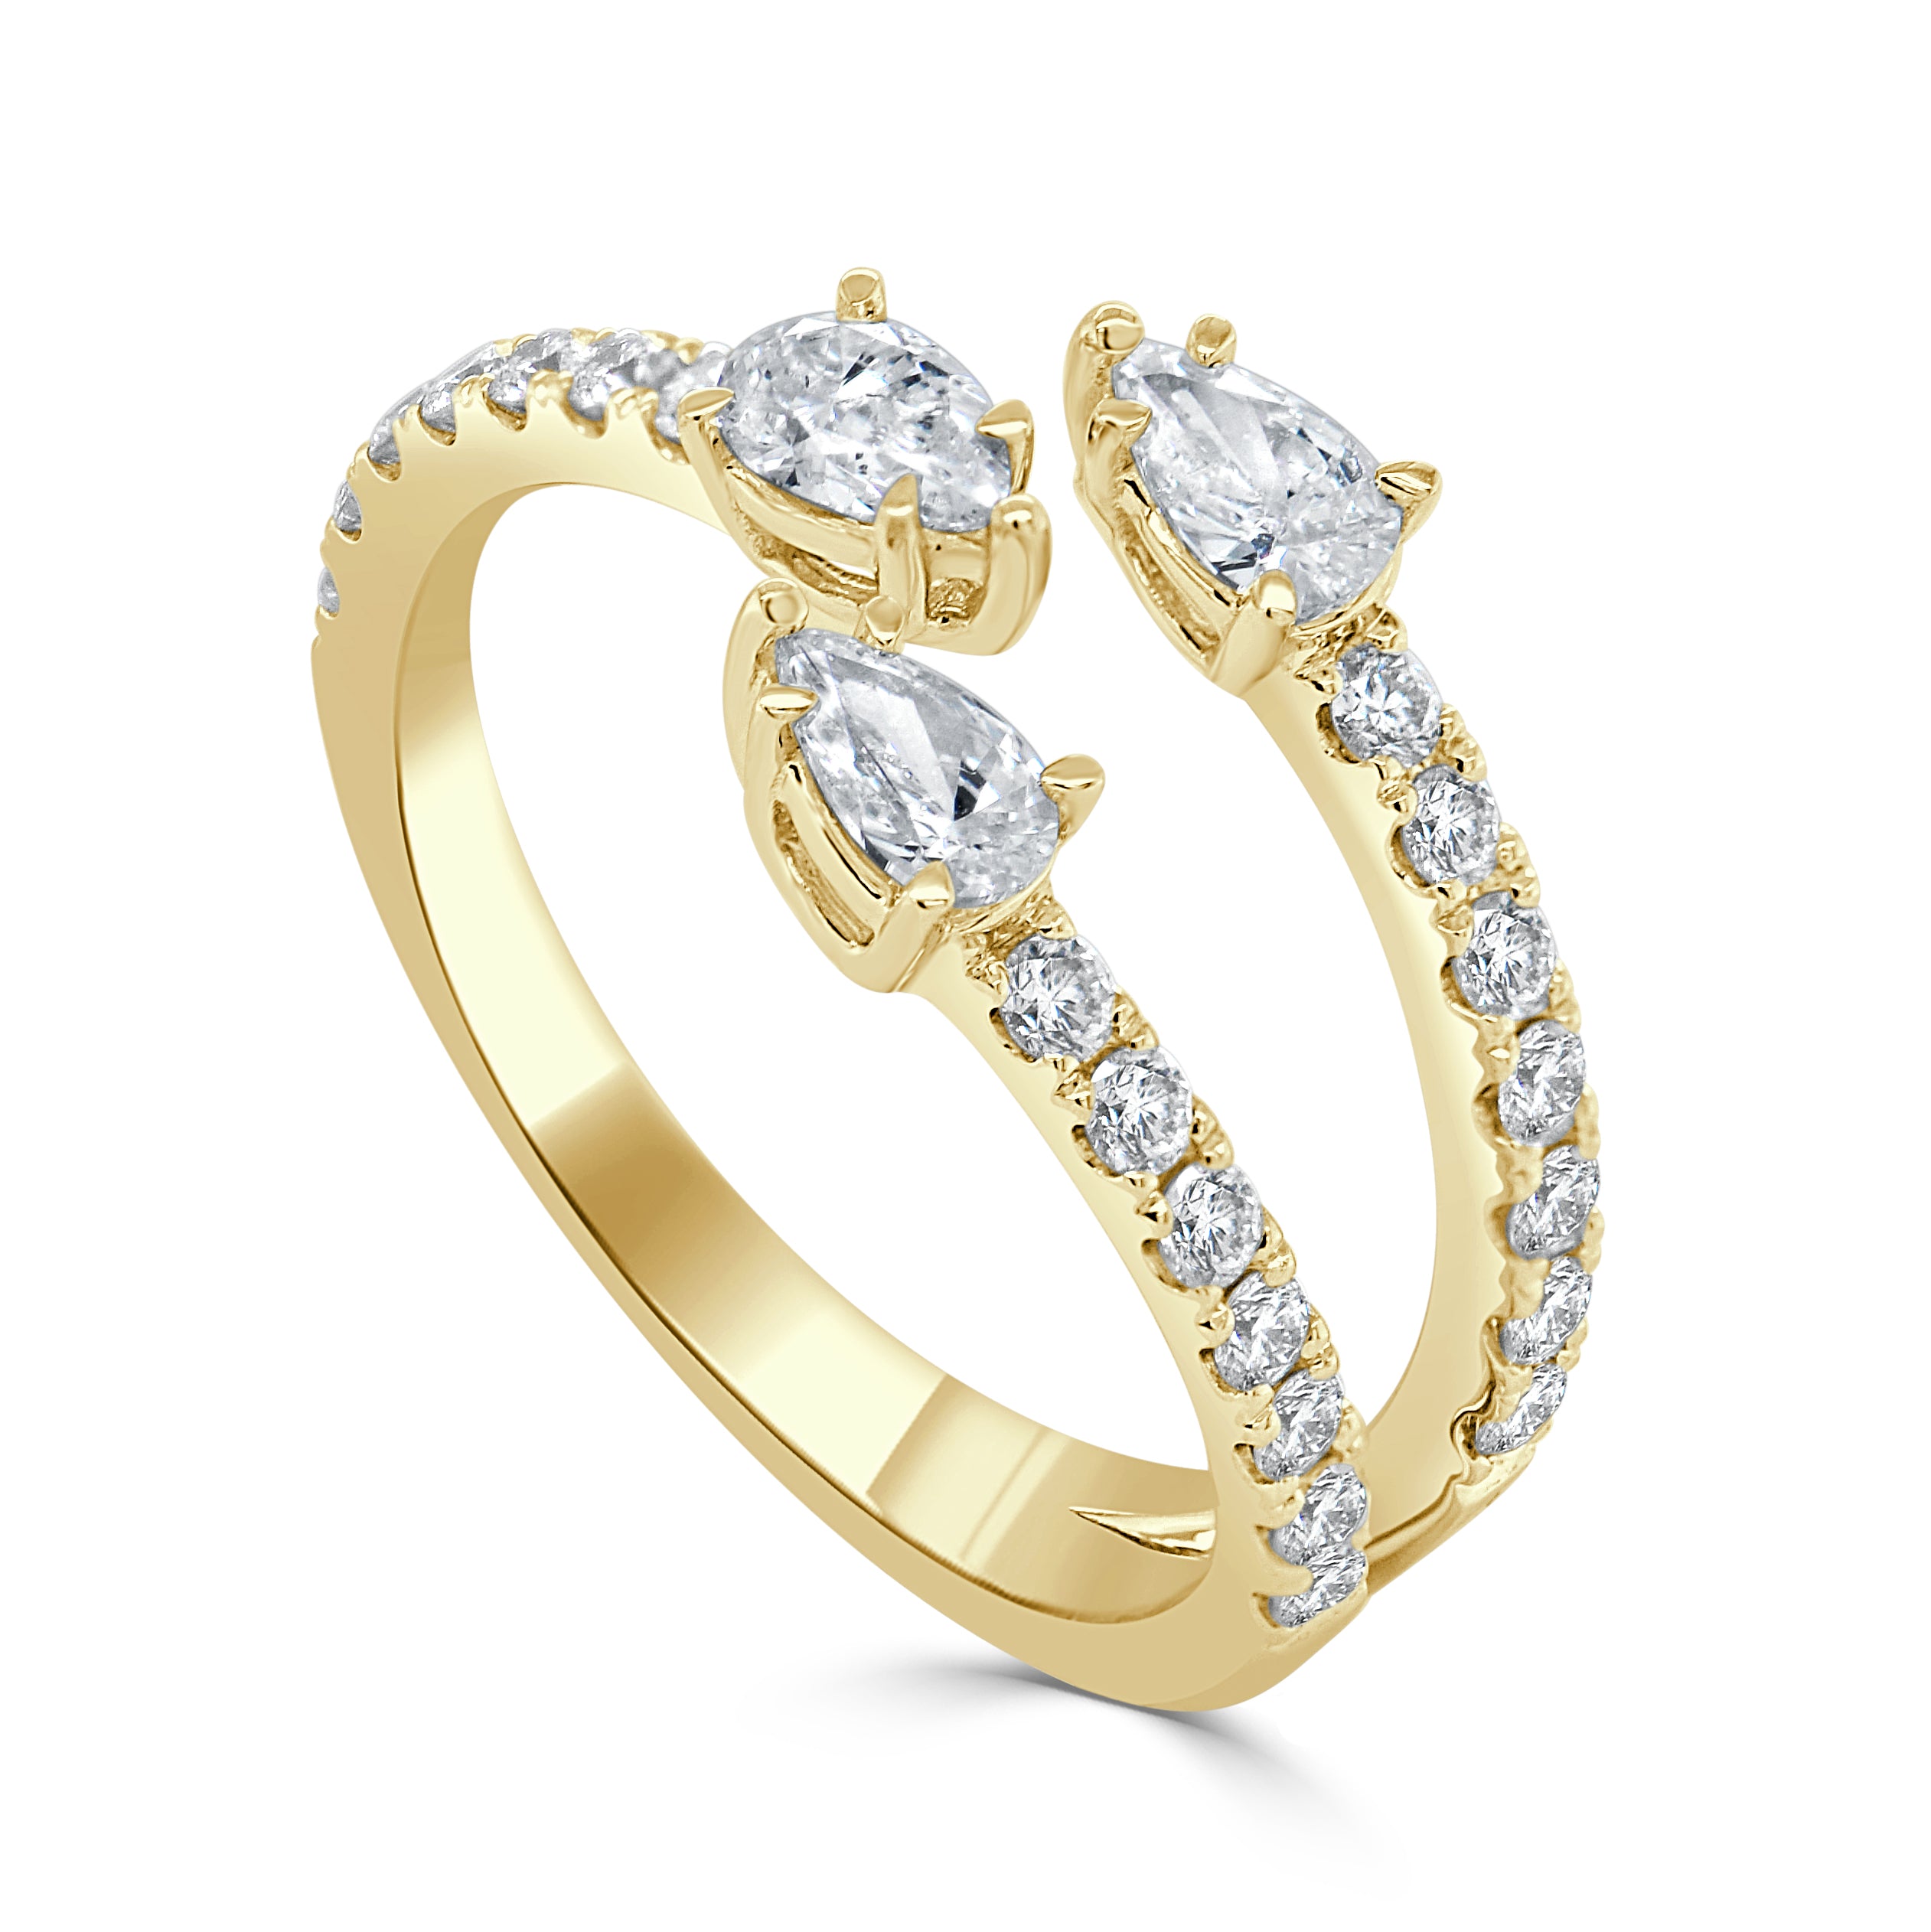 14K Gold & Diamond Ring - 0.91ct